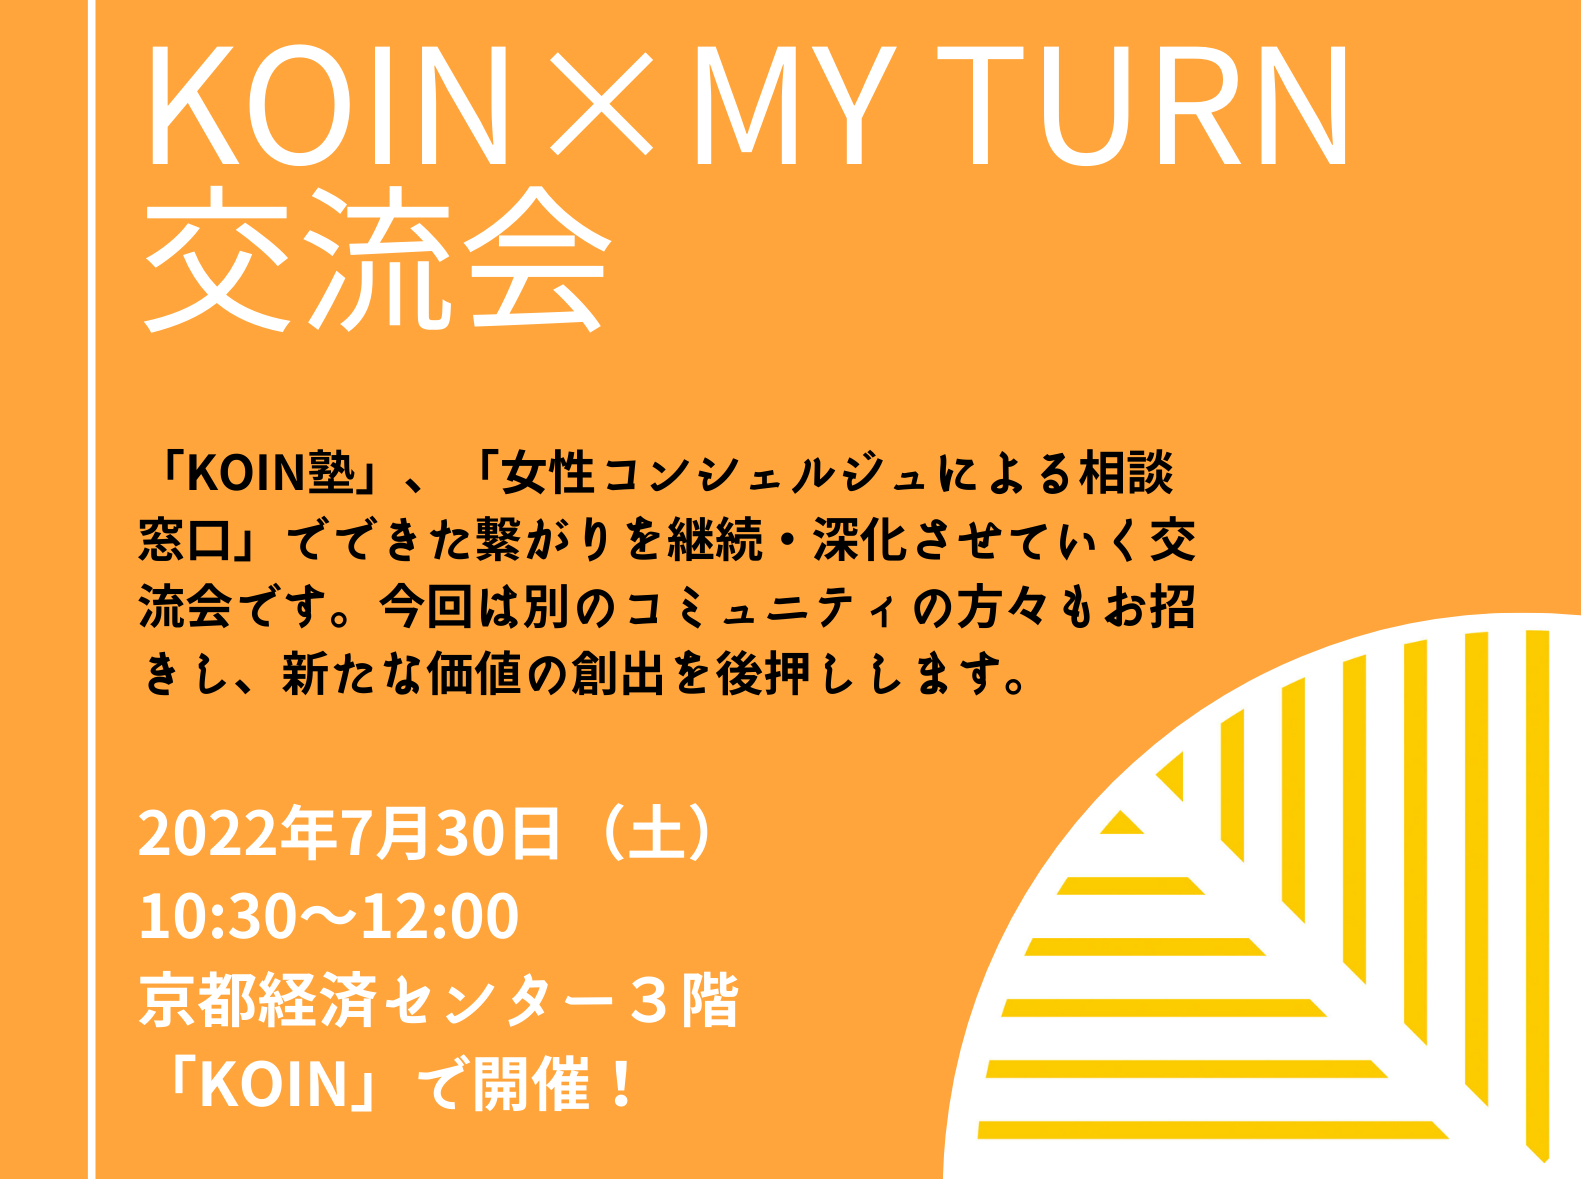 7/30 KOIN × my turn 交流会